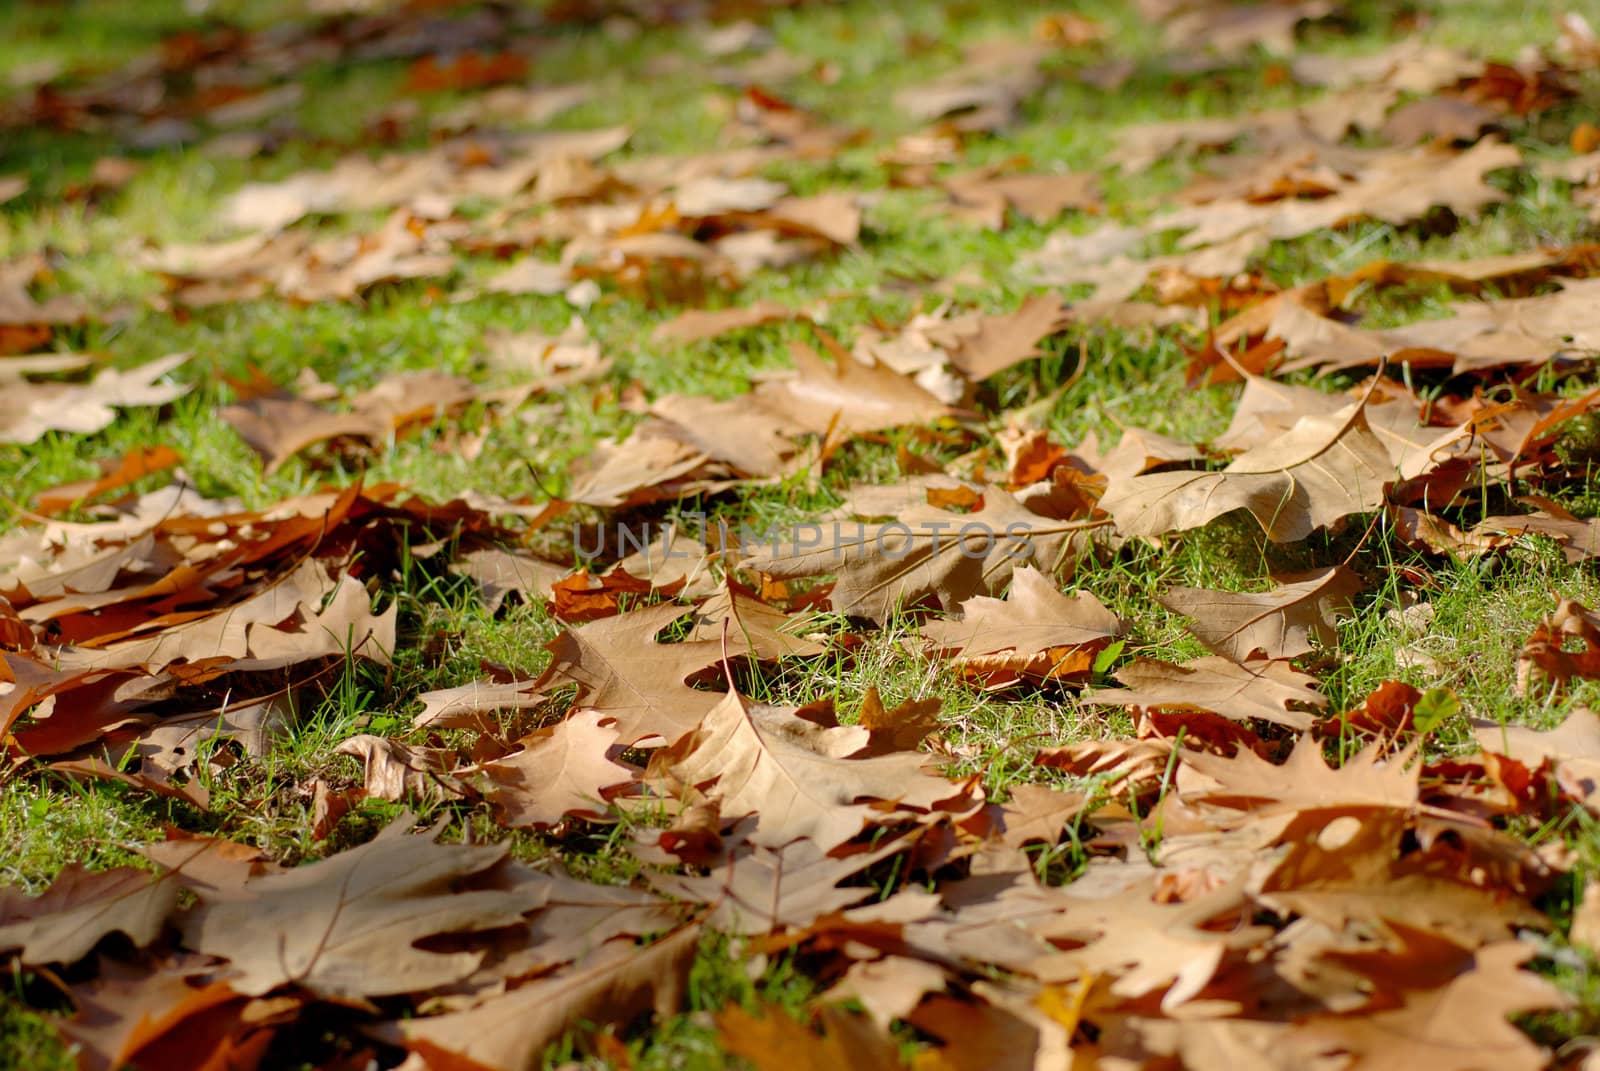 Leaves of oak scattered on the grass. Autumn season. by wojciechkozlowski